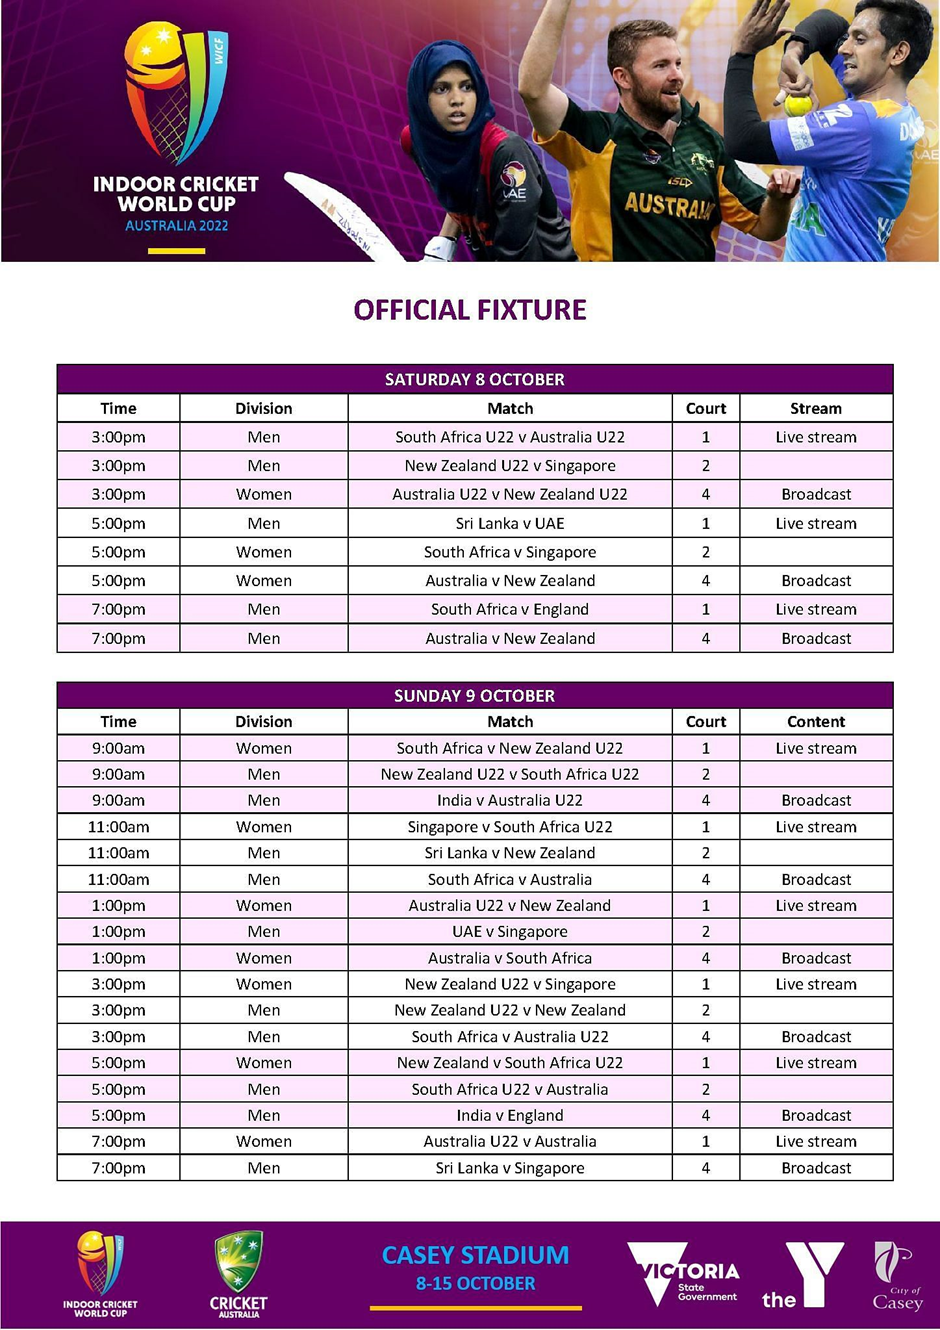 Indoor Cricket News 2022 World Cup Fixtures Released, Teams and Format